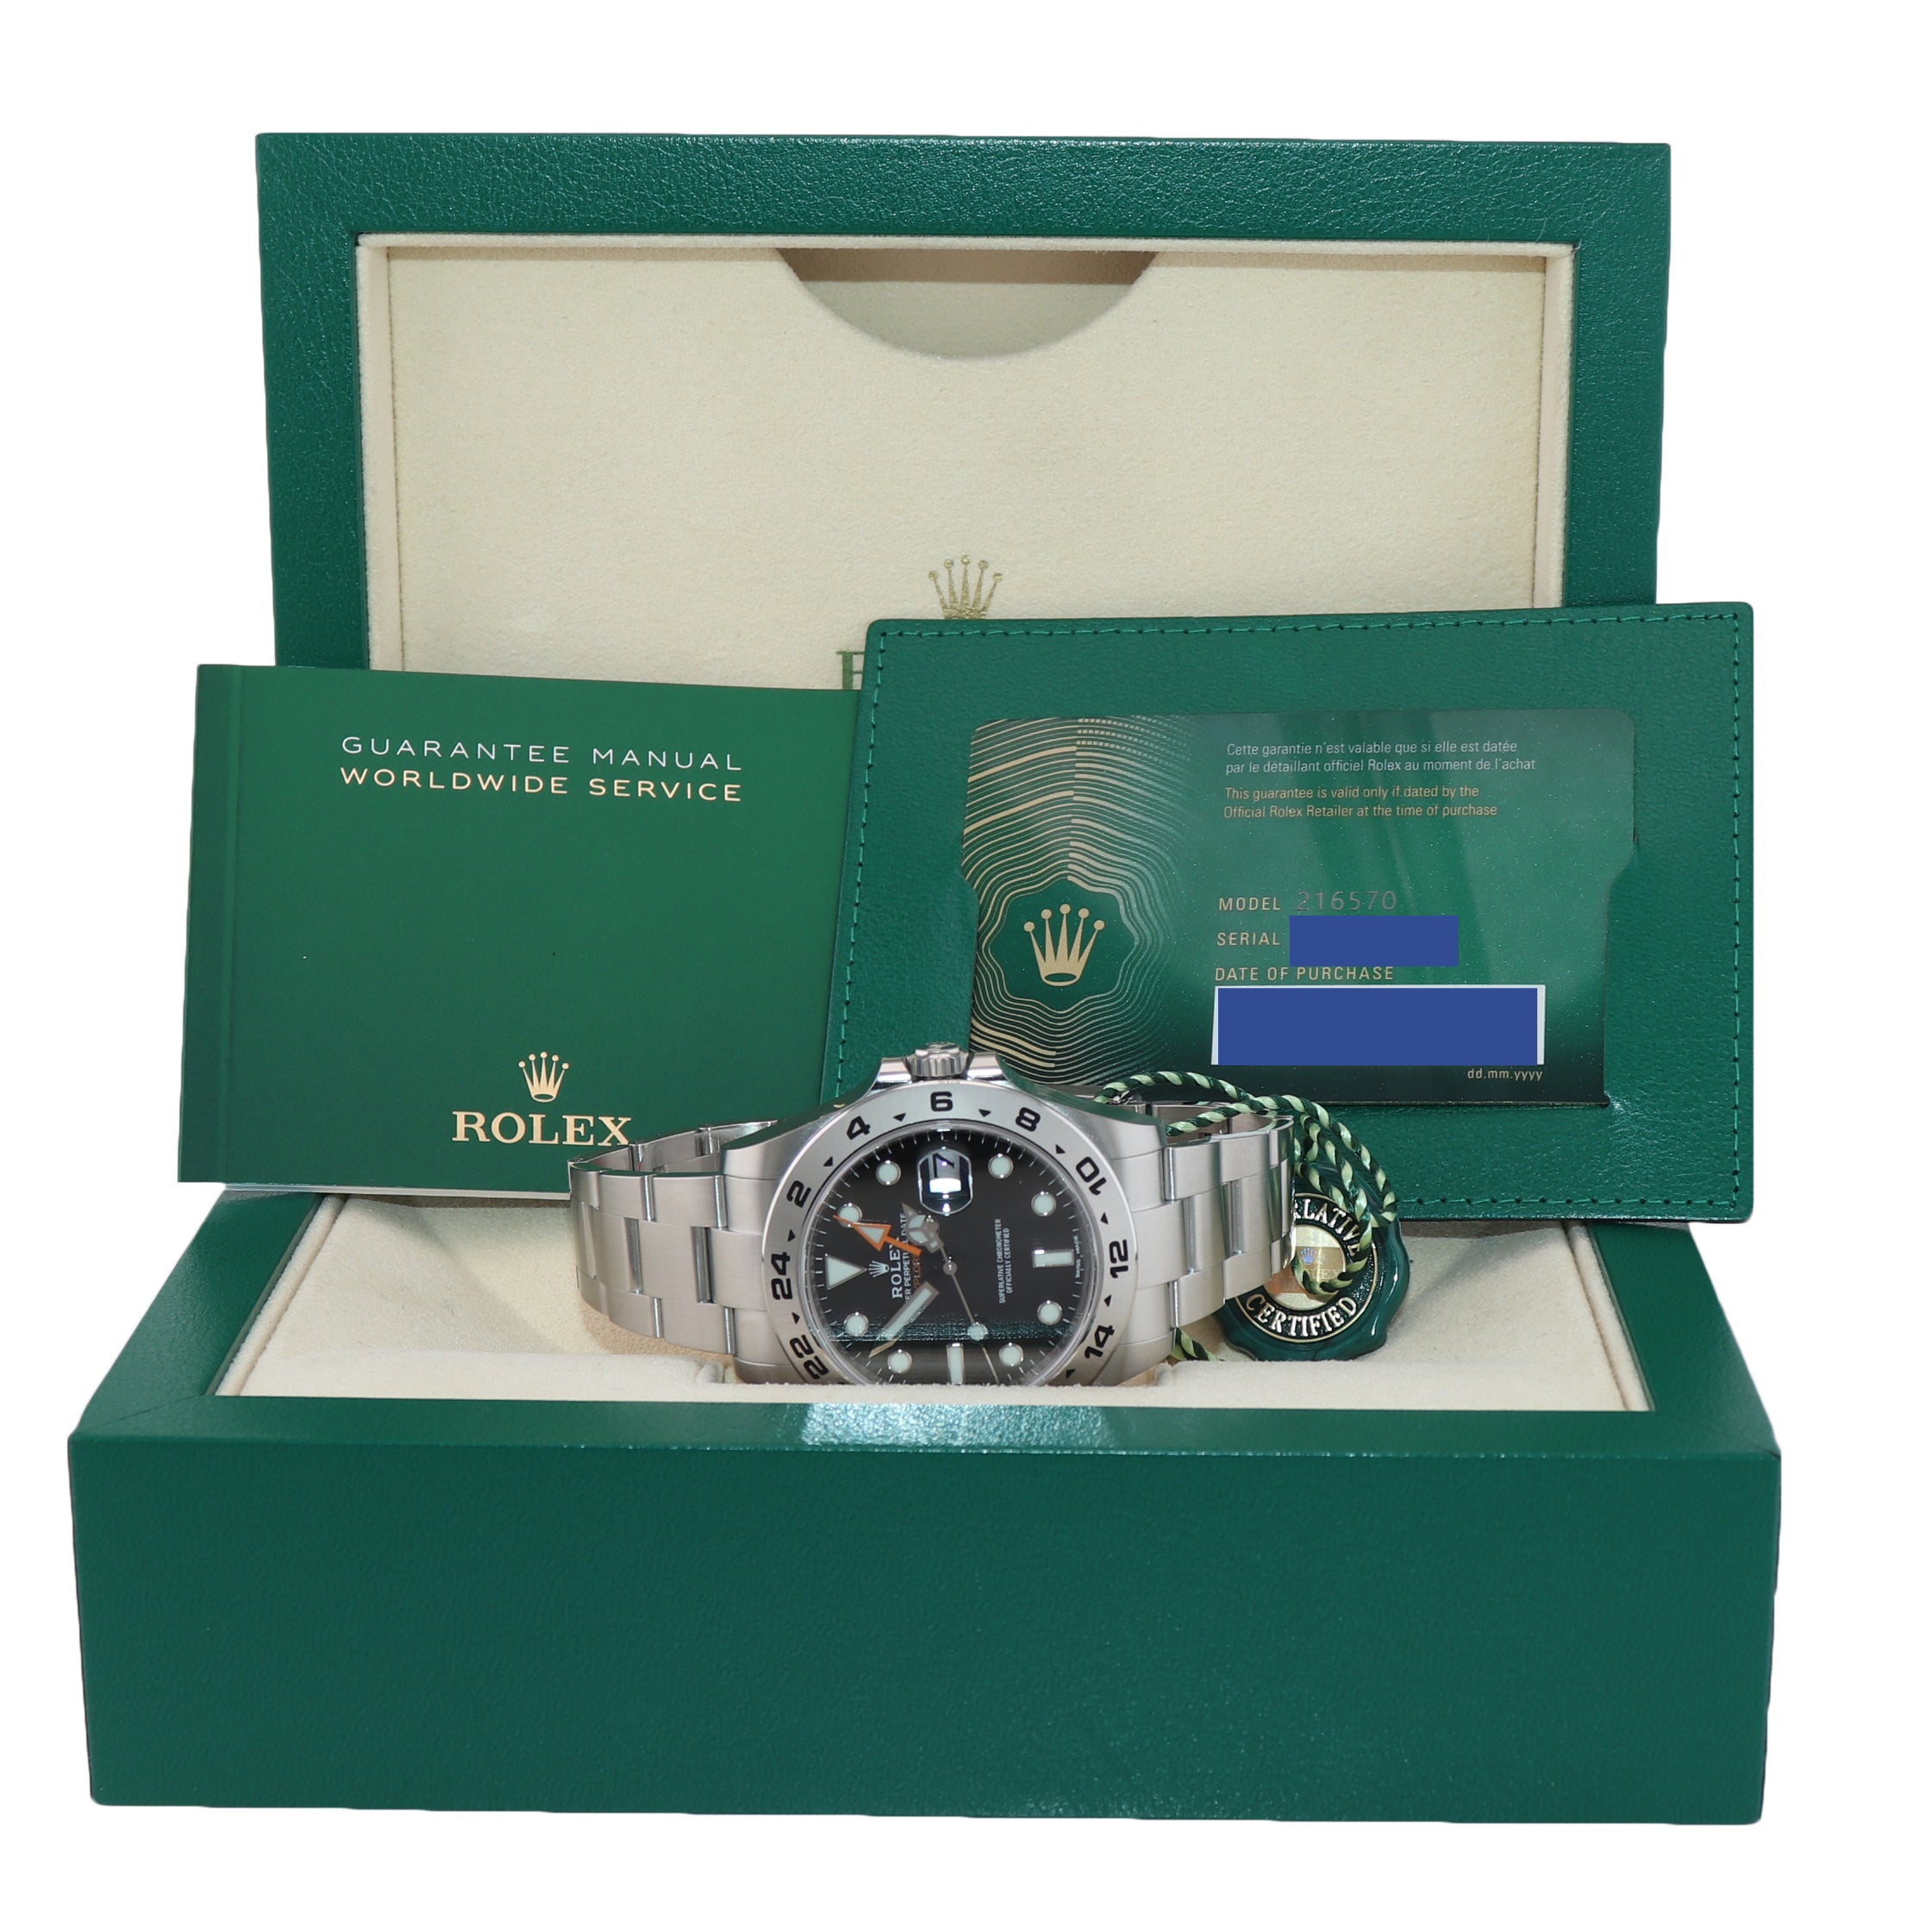 STICKERS 2021 PAPERS Rolex Explorer II 42mm 216570 Black Steel GMT Watch Box